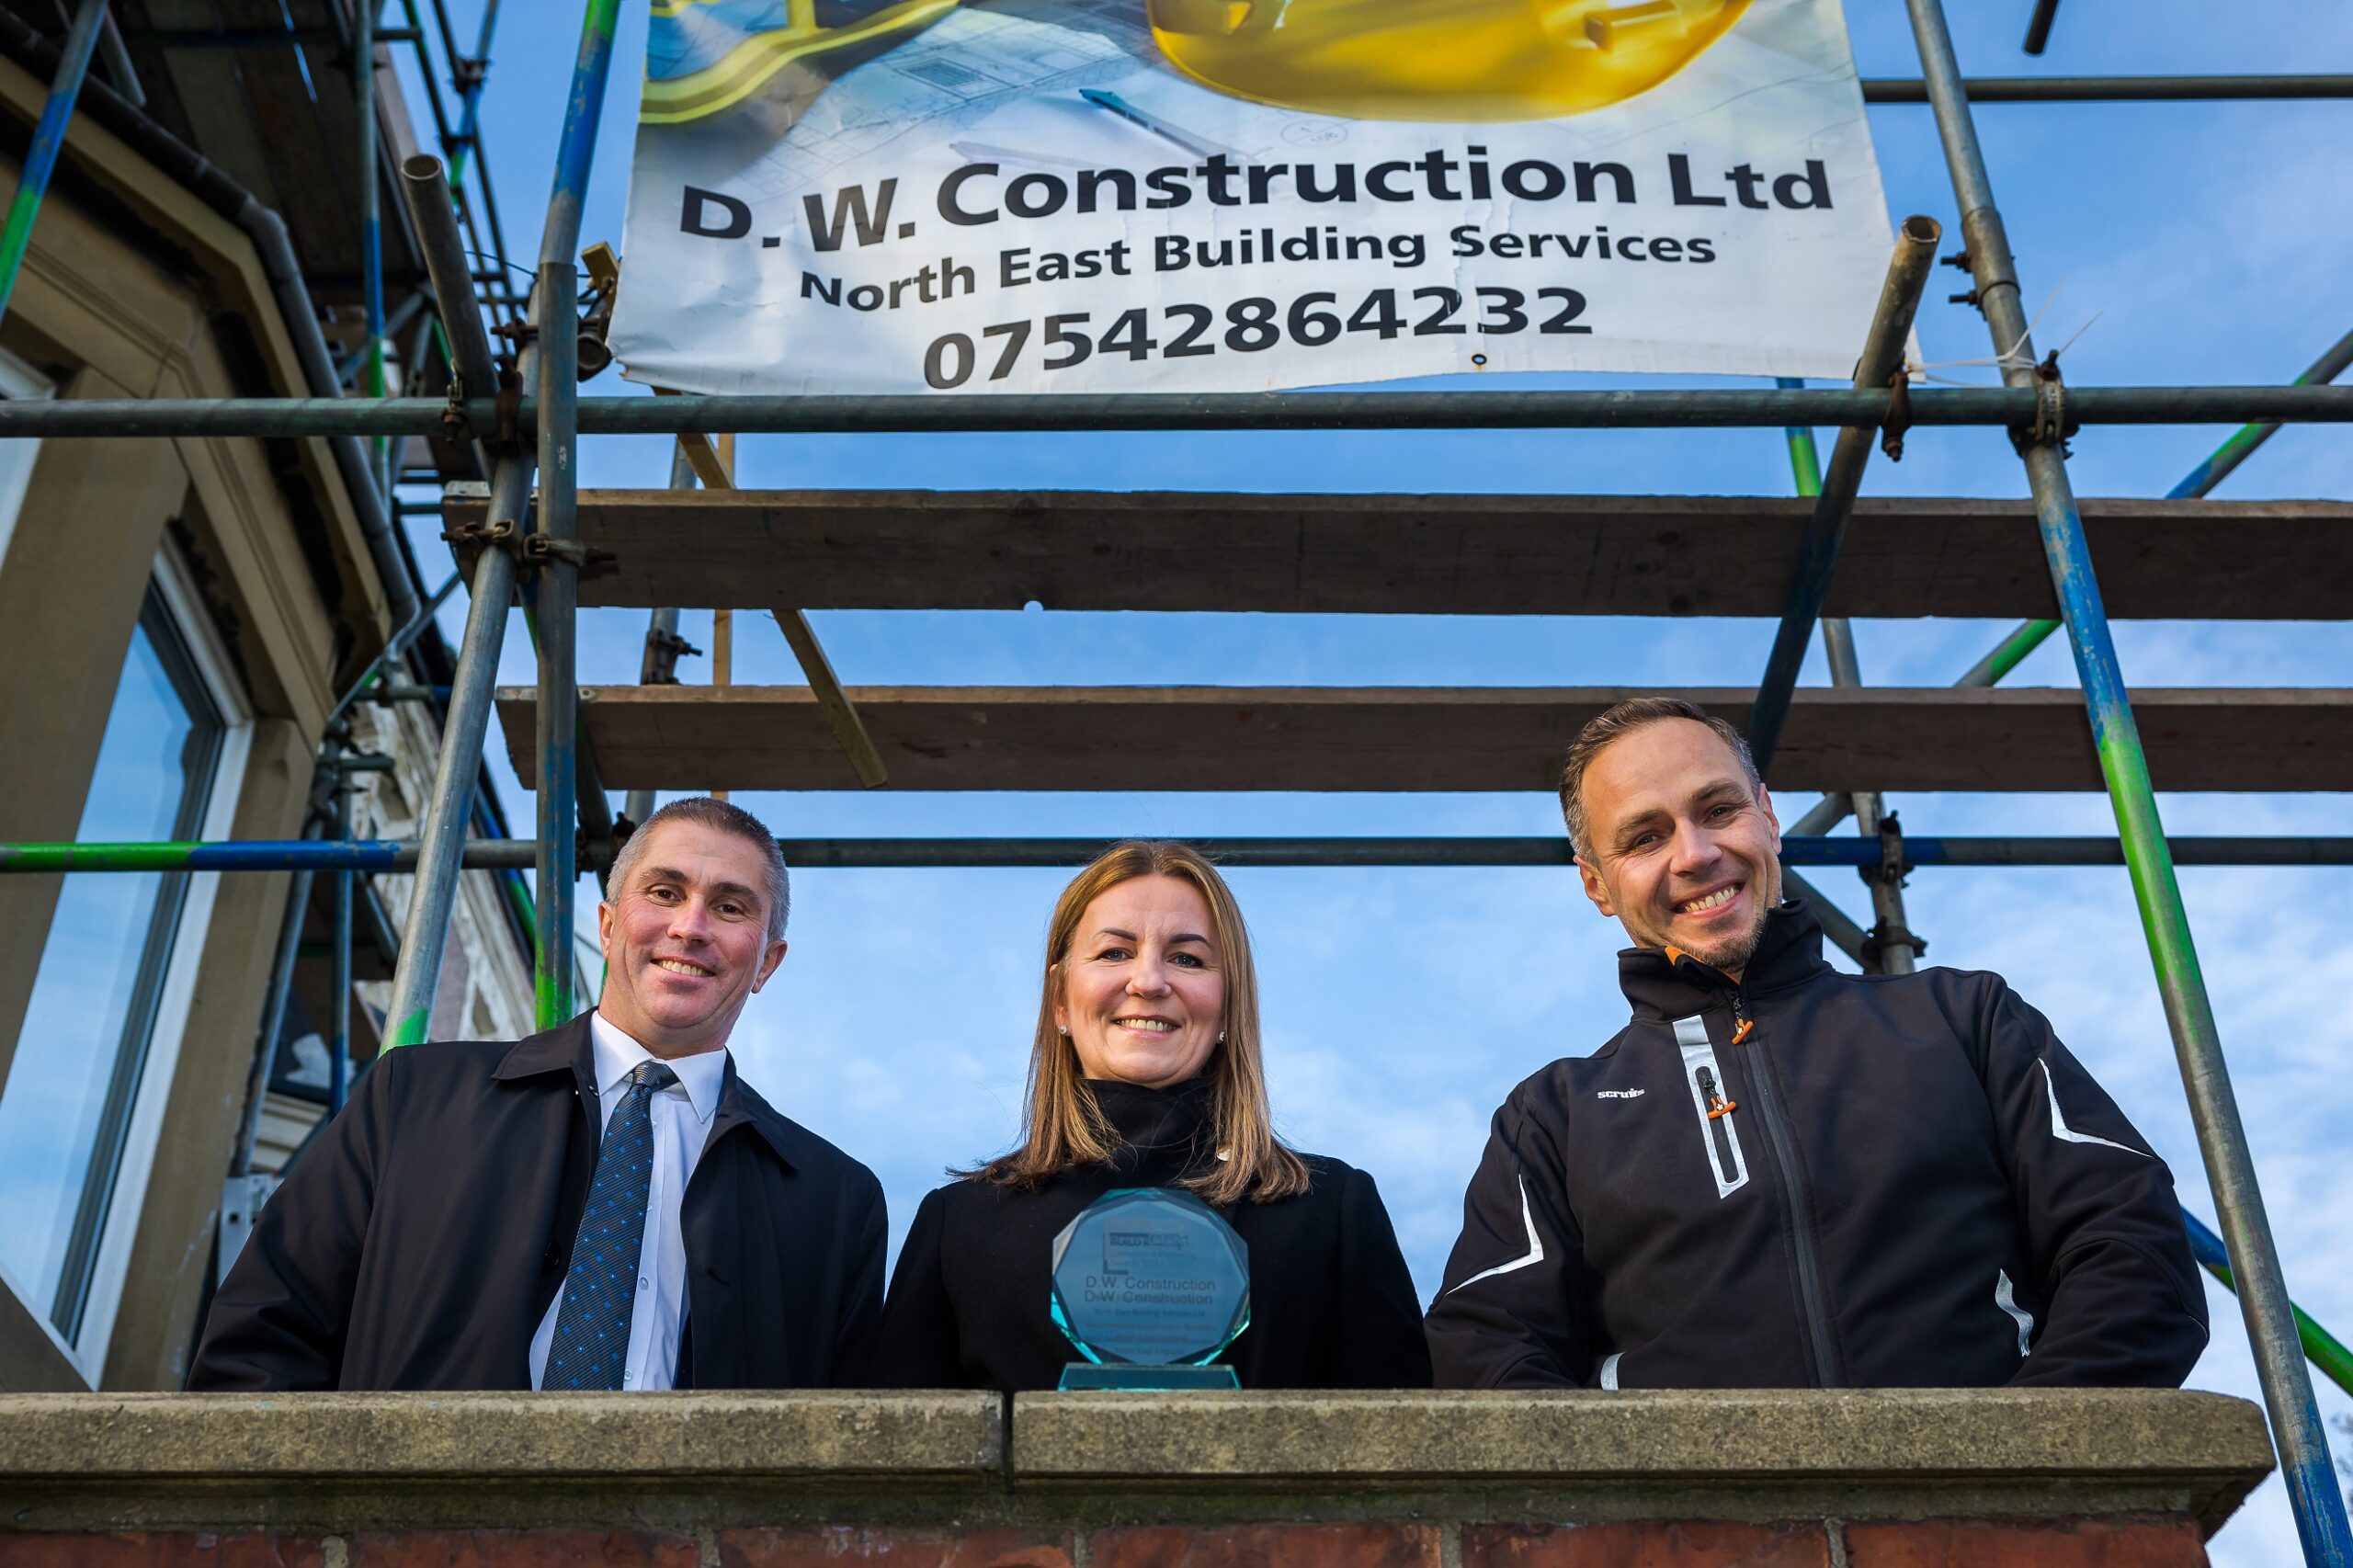 South Tyneside Builds On Firm Foundations with Prestigious Award